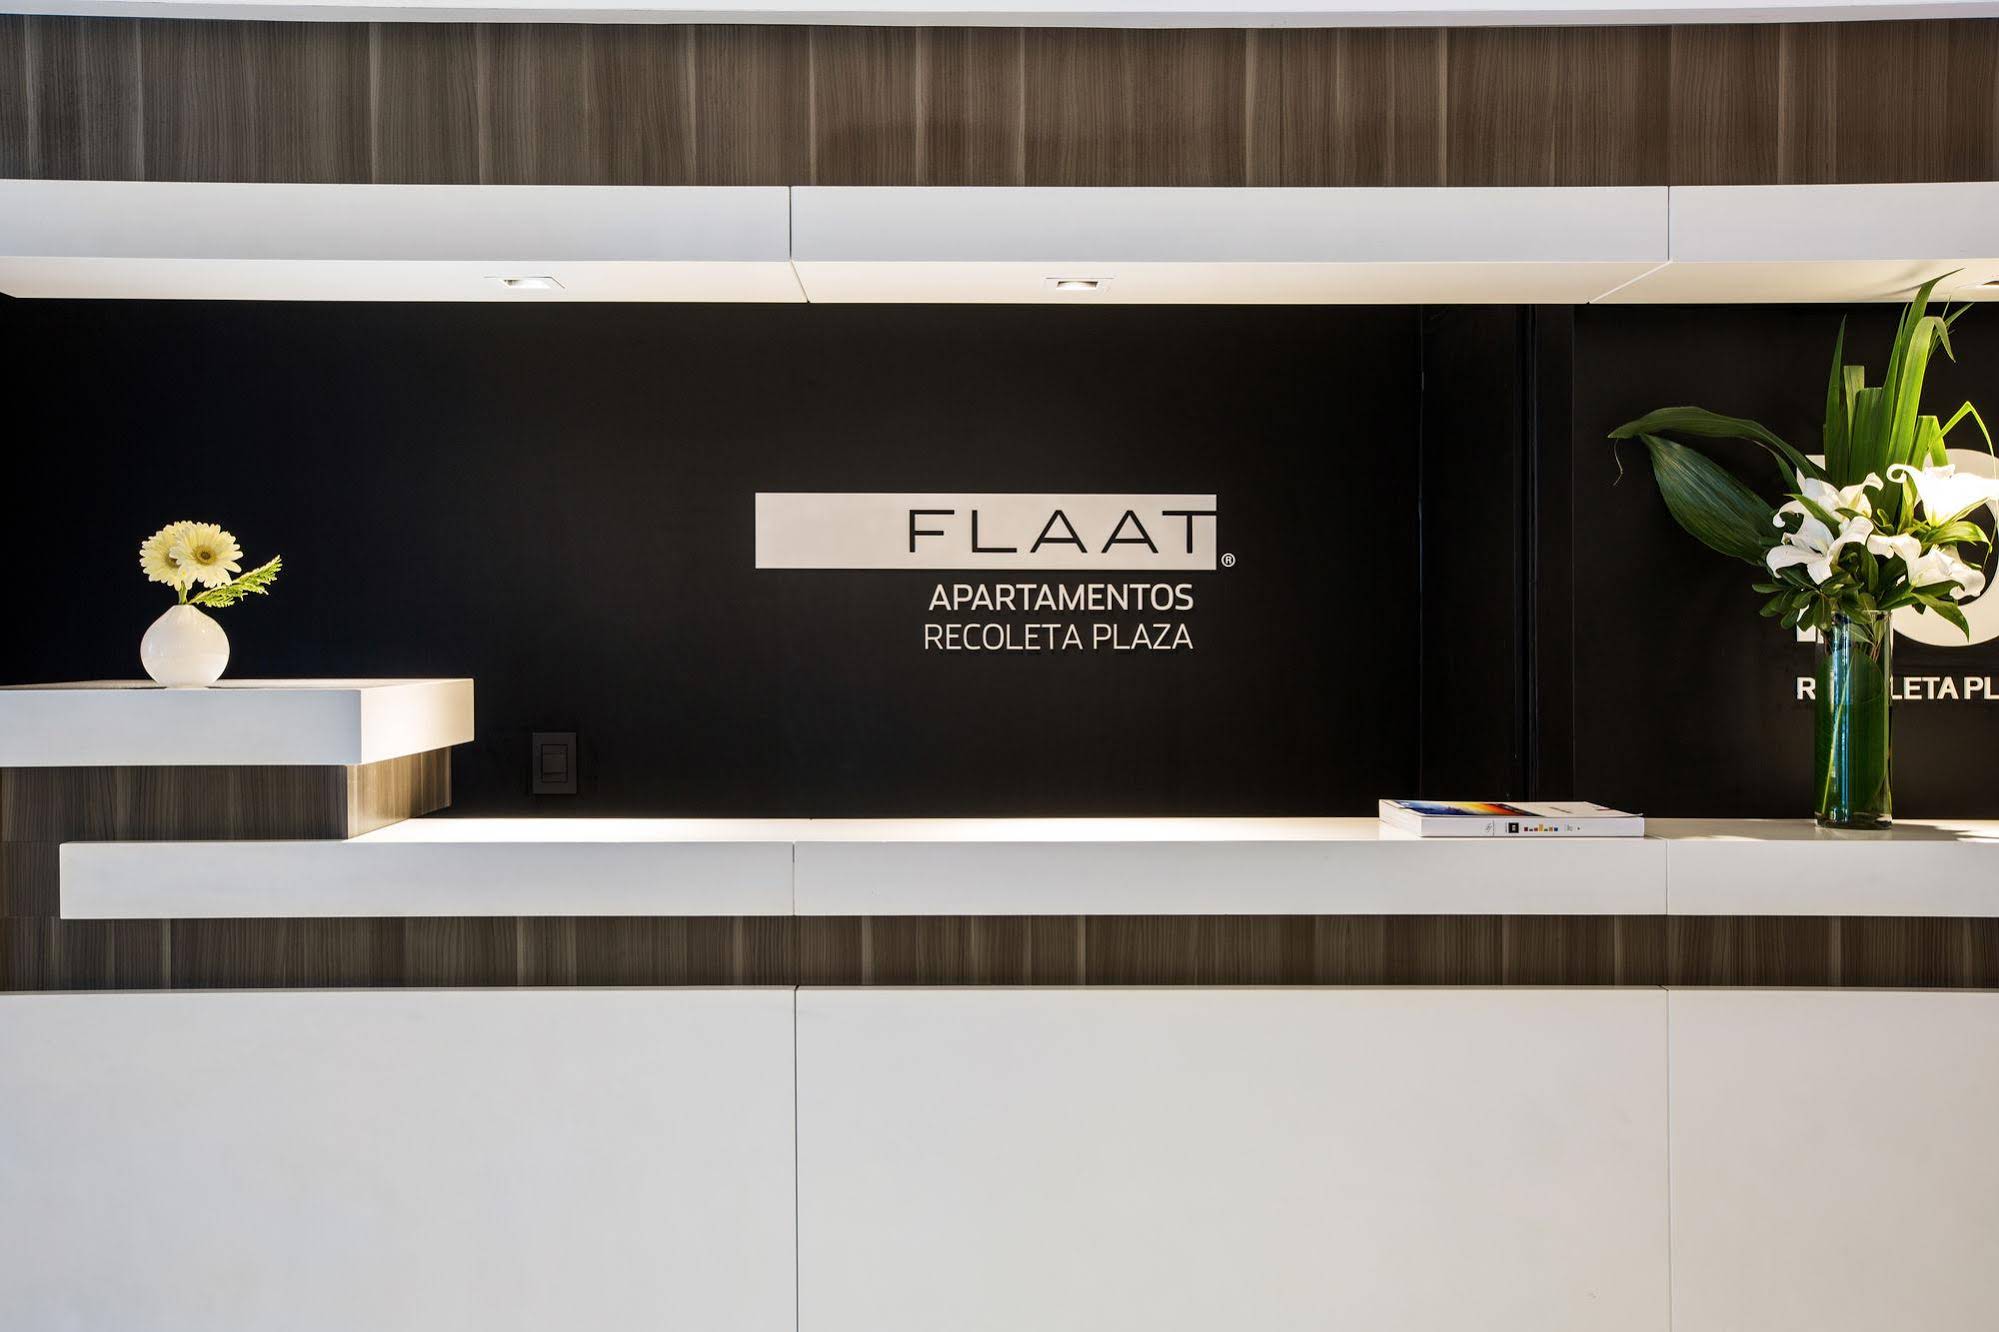 Flaat Apartamentos Recoleta Plaza